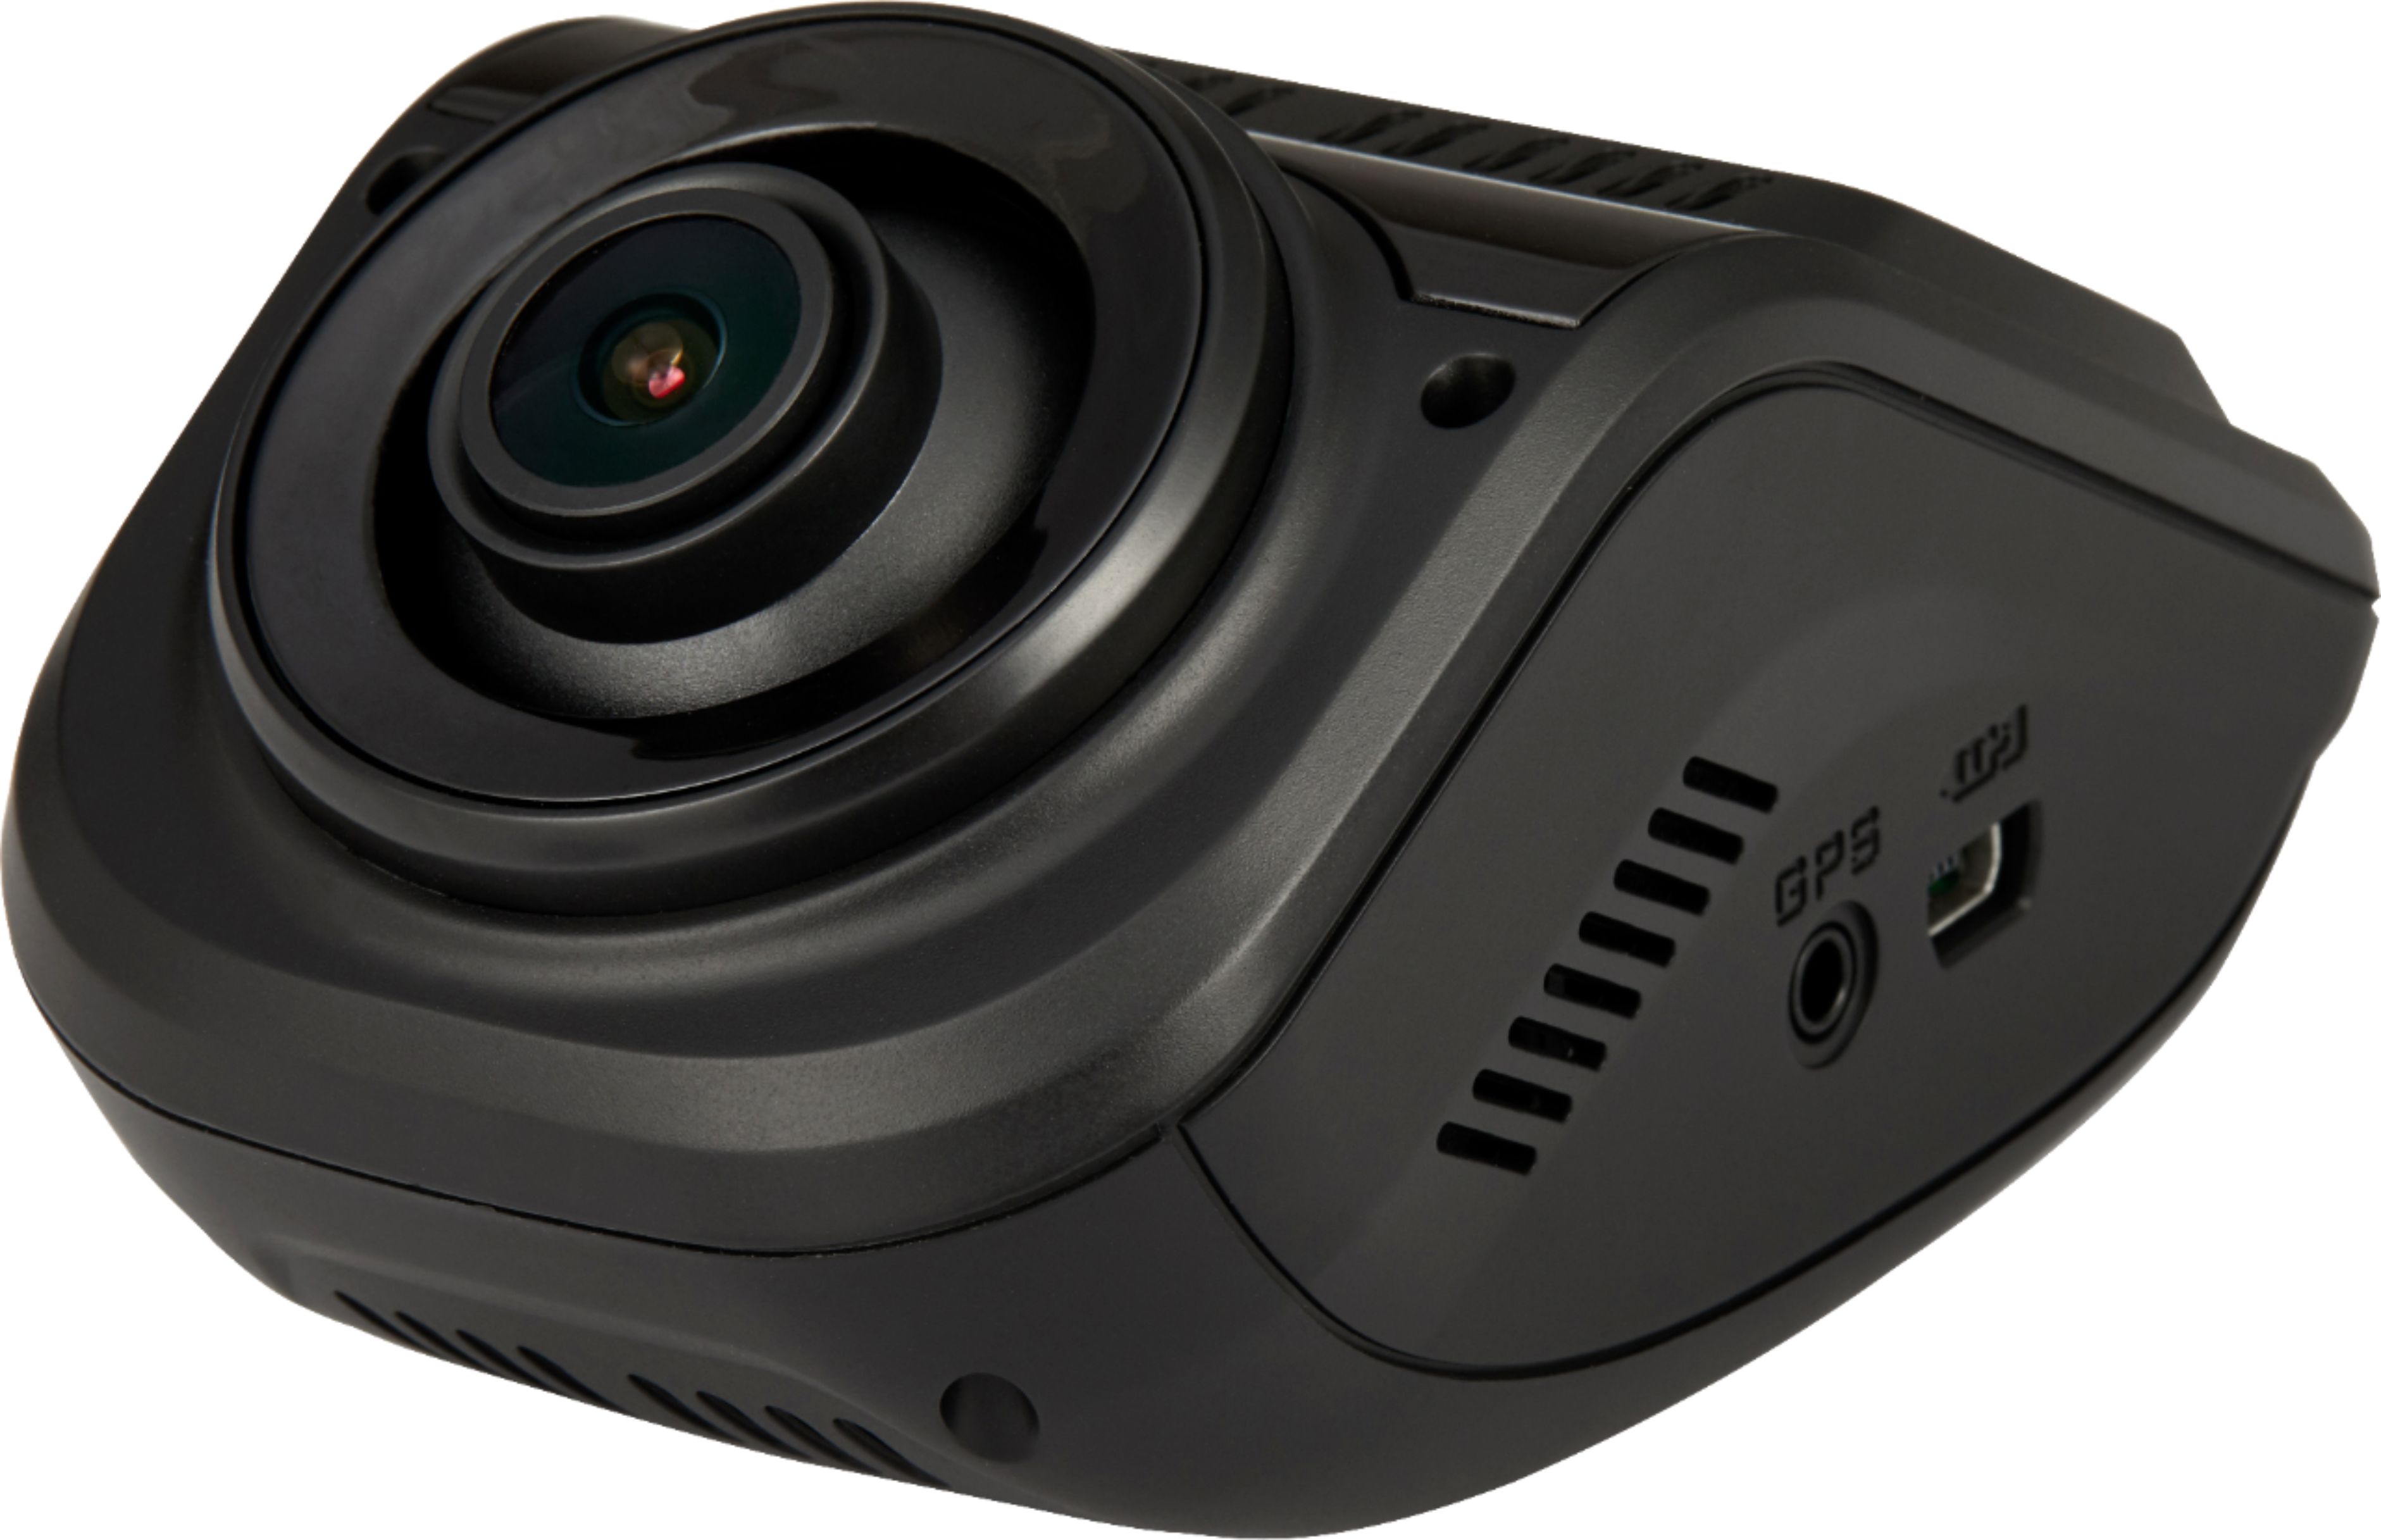 Left View: ESCORT M1 DASH CAM - Companion Dash Cam to your Escort Radar Detector. Video/audio Clip Saving, Editing & Sharing